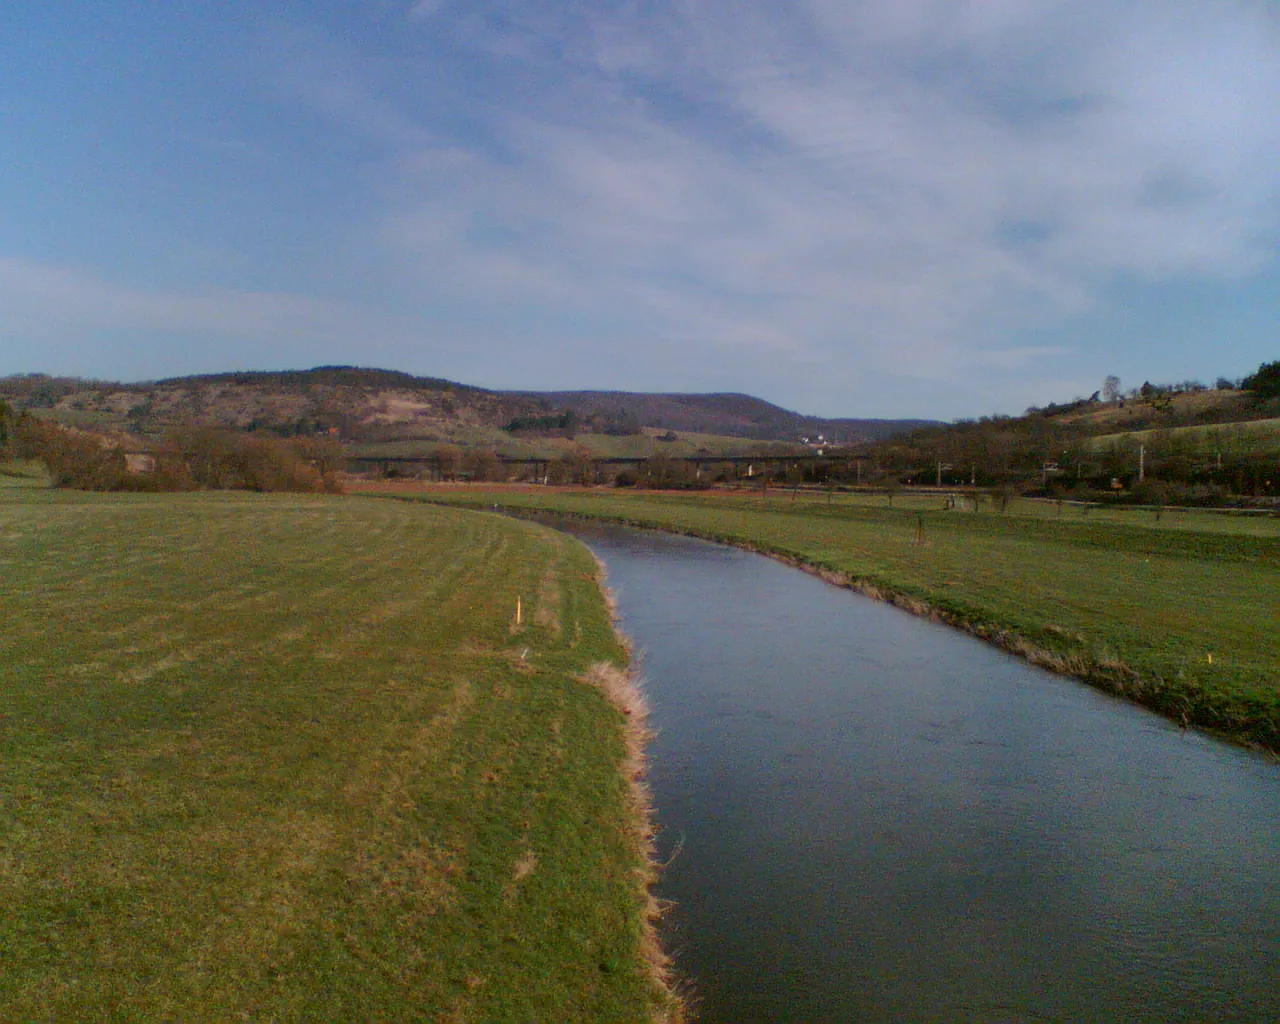 Photo showing: River Leine flowing towards Hube mountains. Picture was taken in Salzderhelden, Lower Saxony.